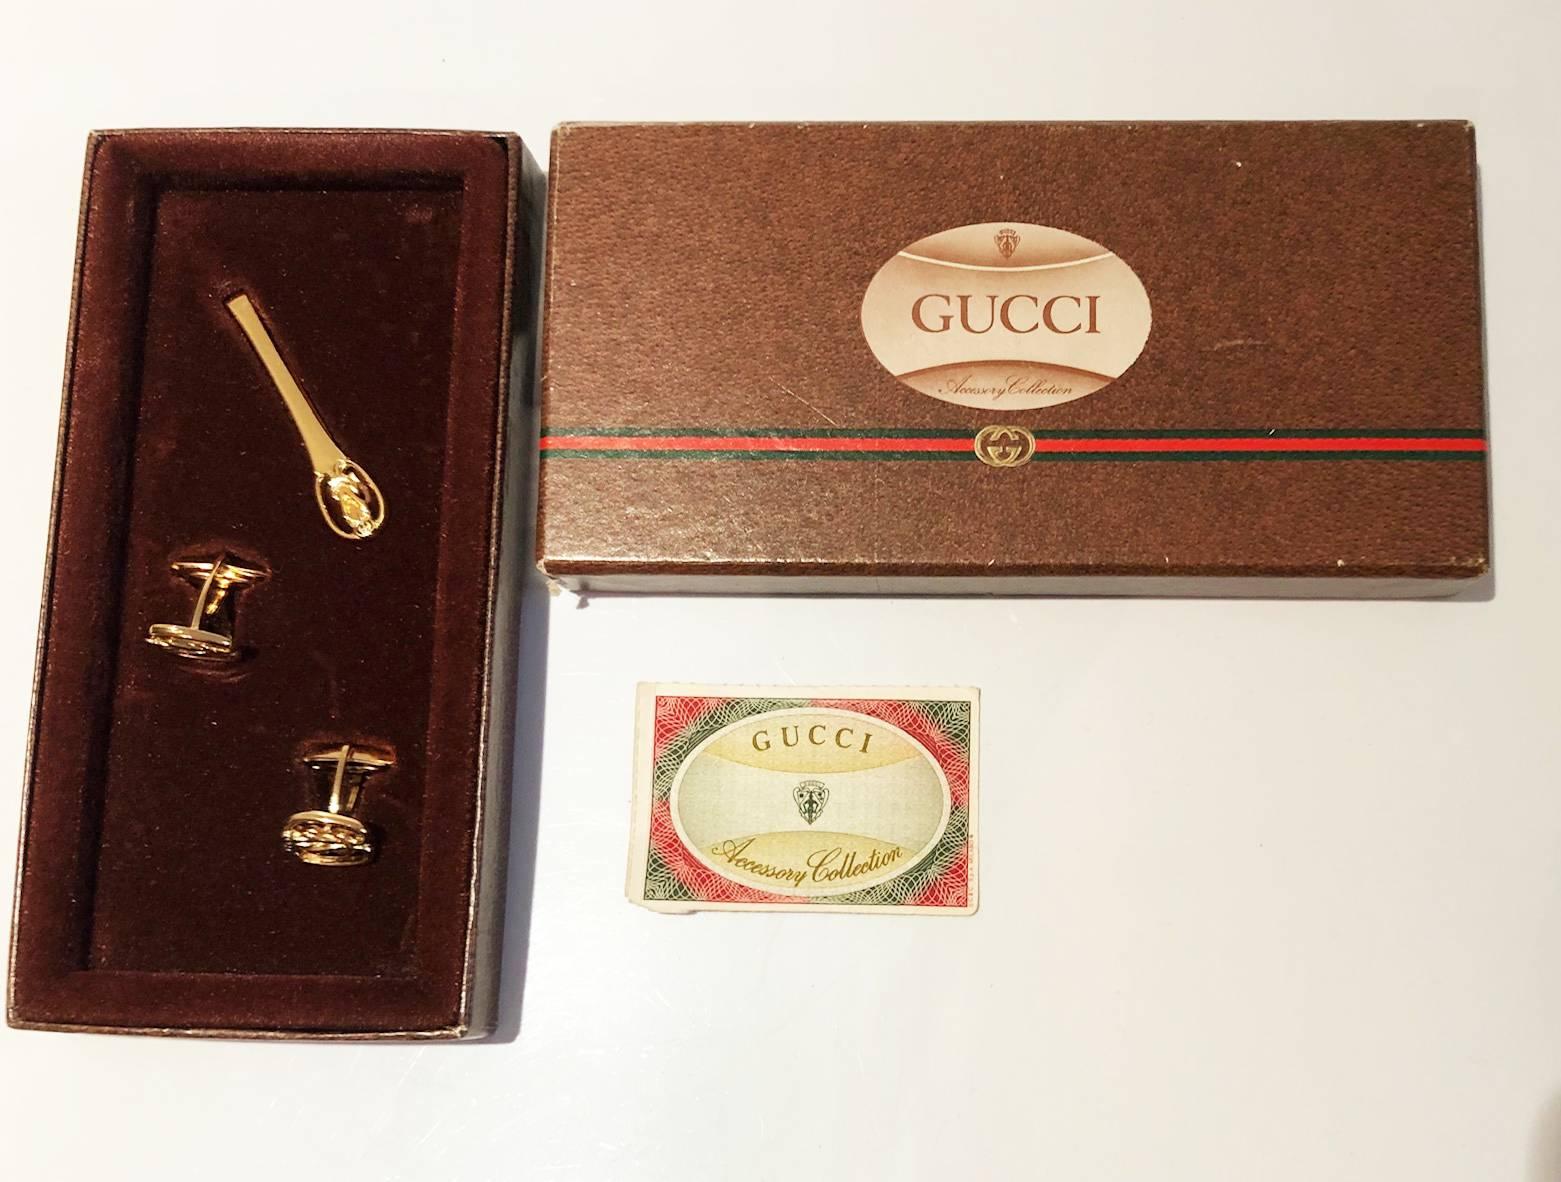 gucci cufflinks and tie clip set